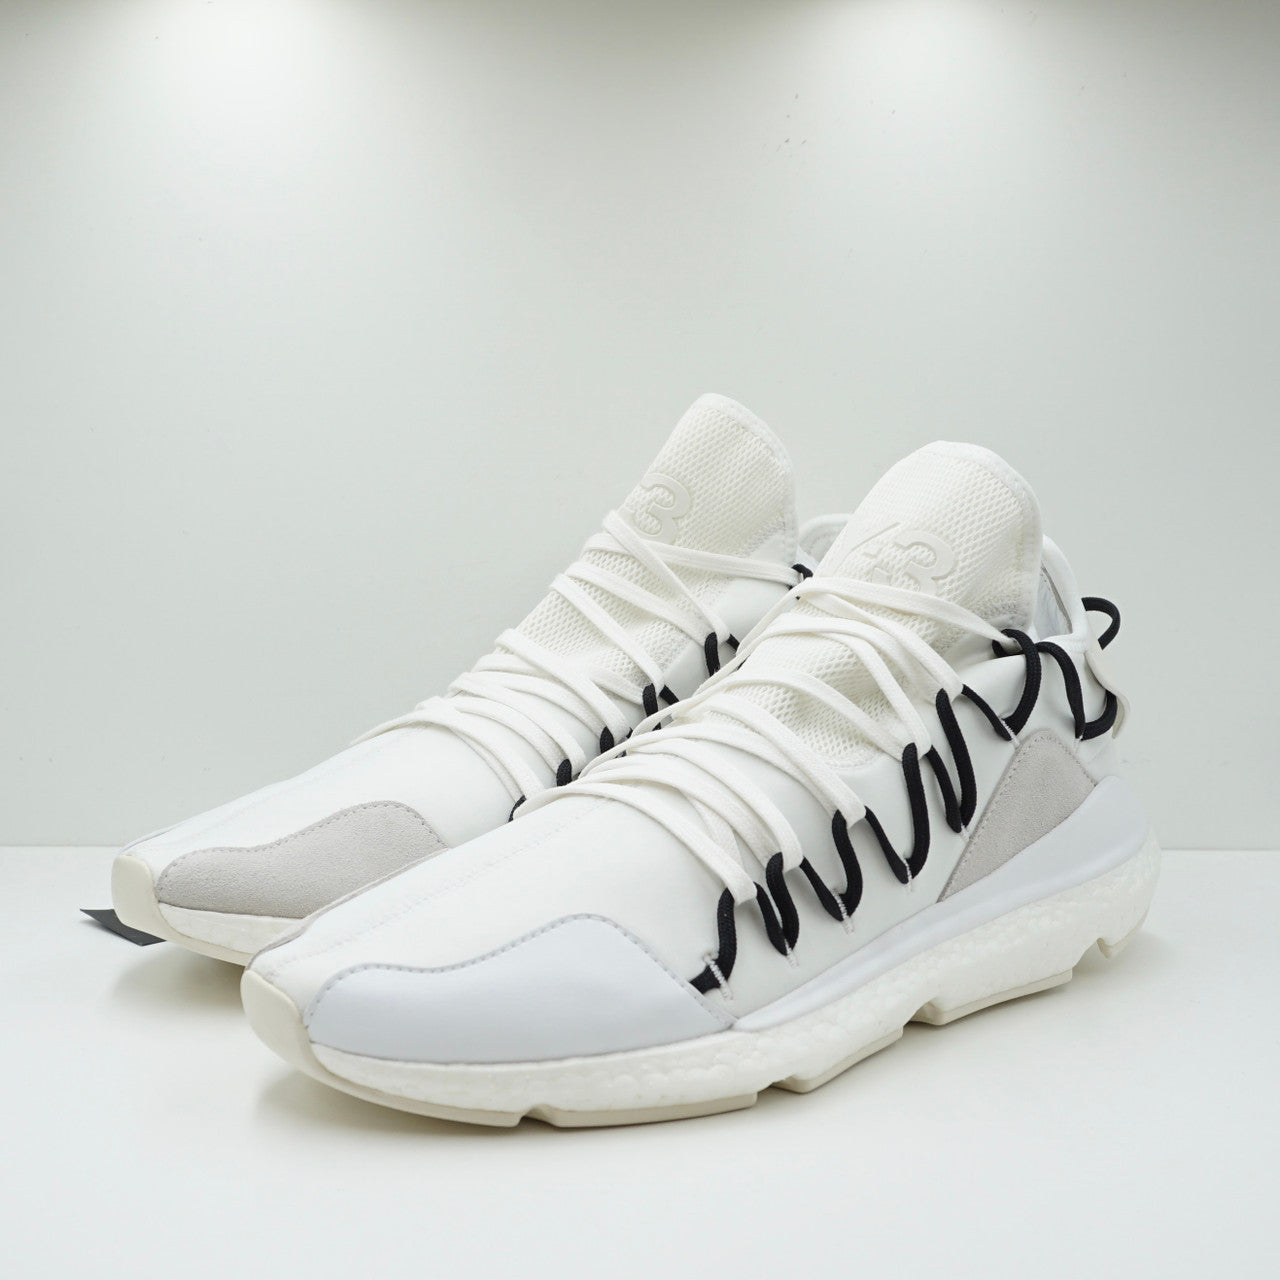 Adidas Y-3 Kusari Footwear White